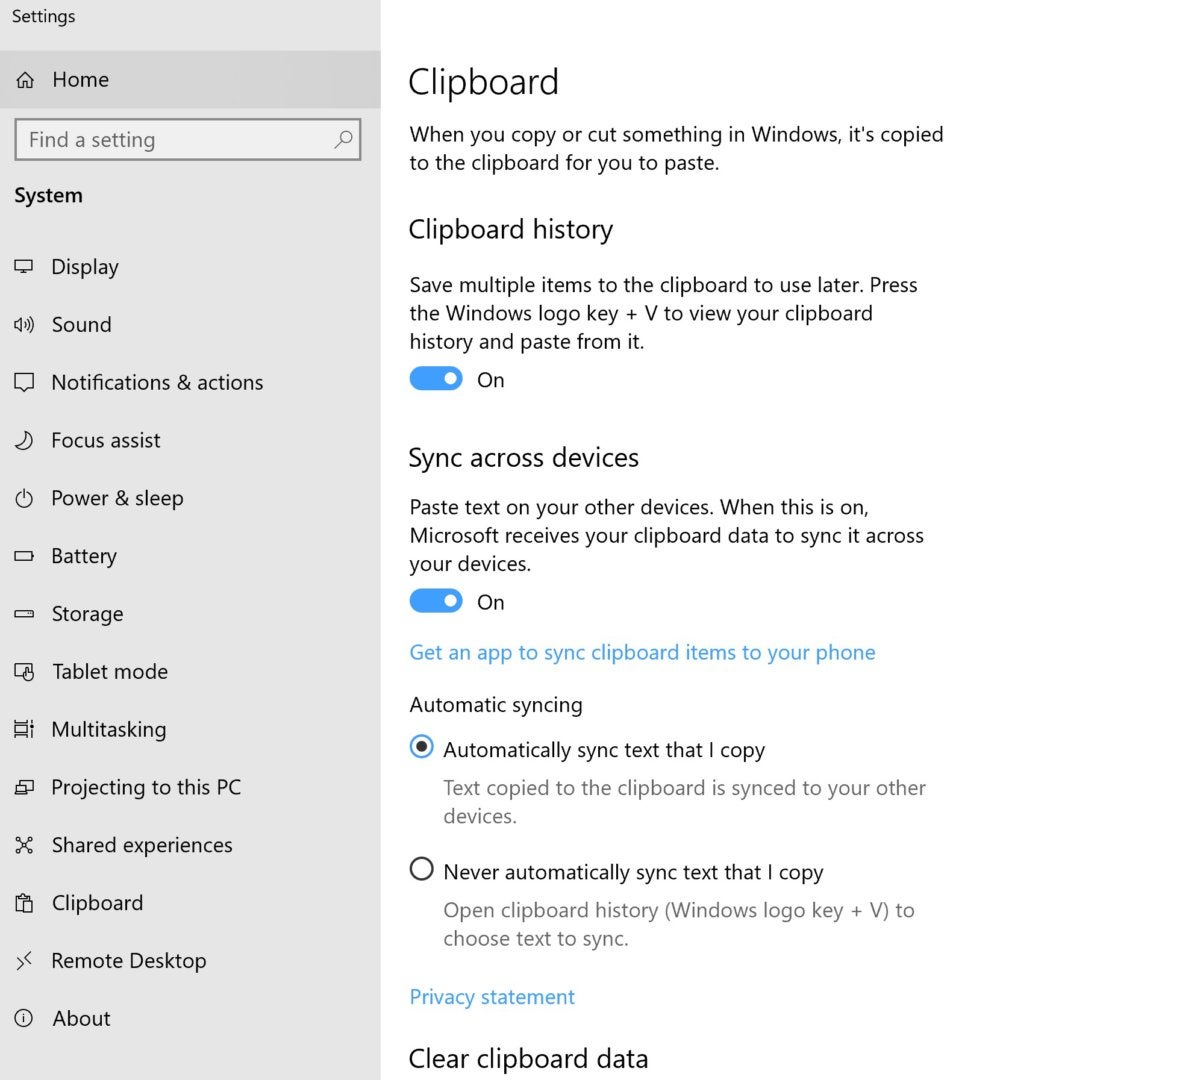 Windows 10 October 2018 Update clipboard settings